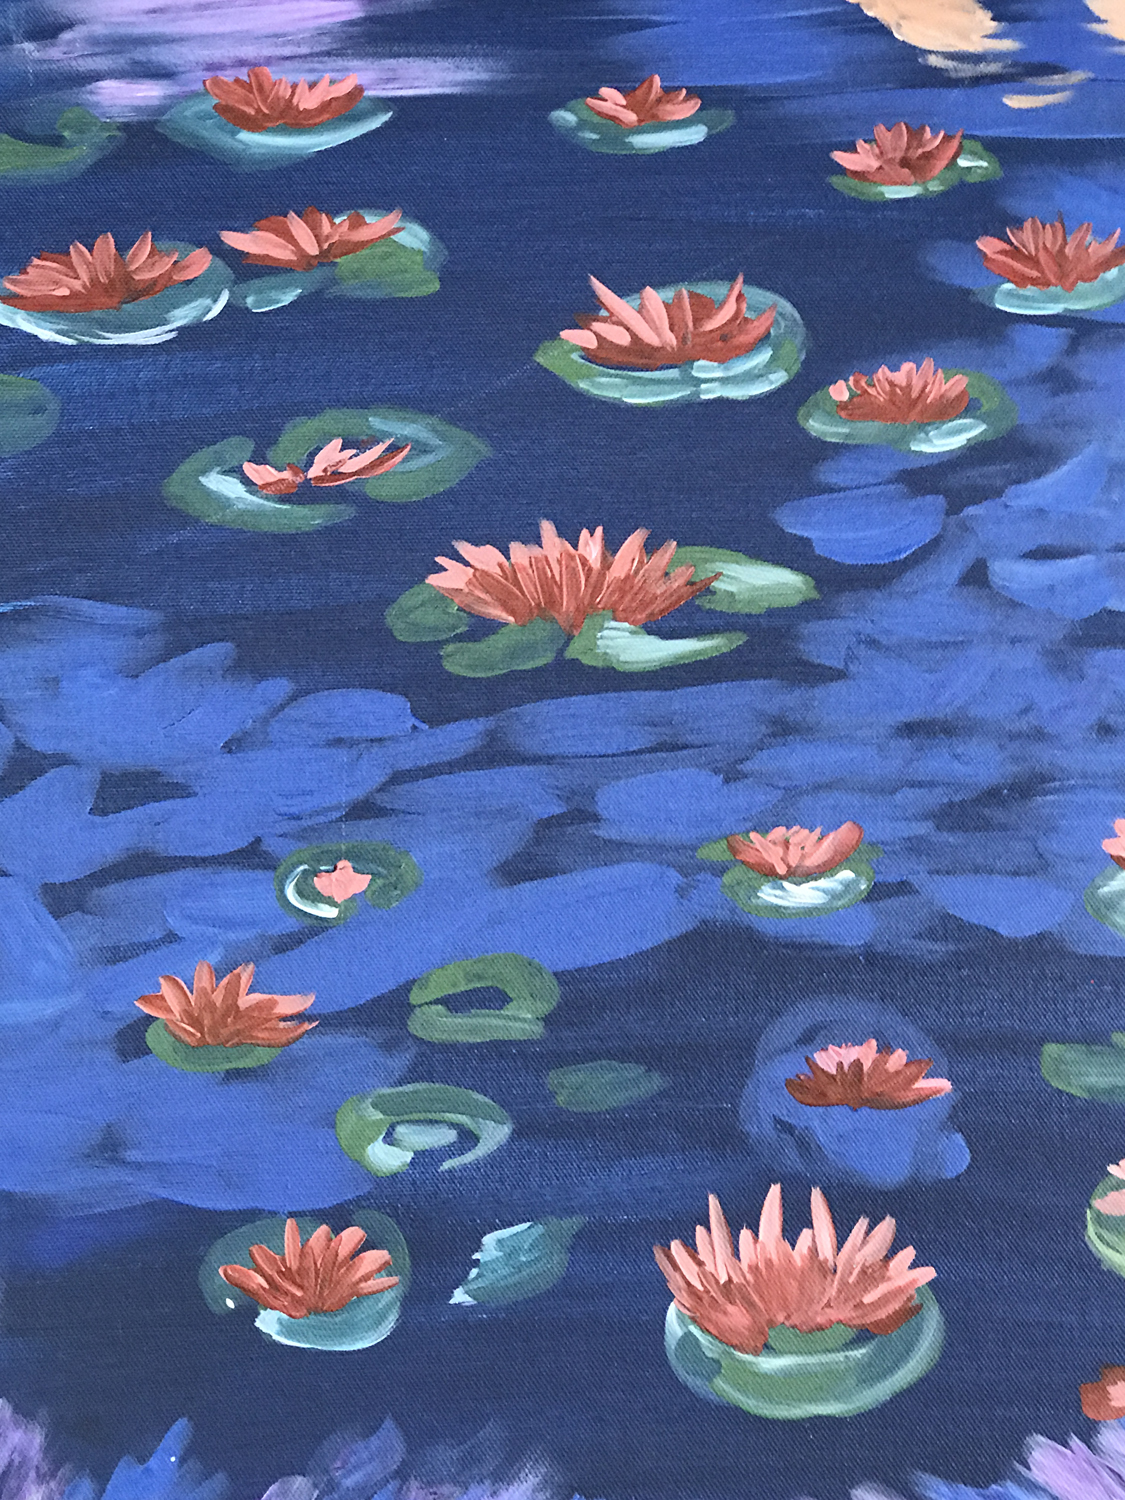 
        
            Upcoming
        In Studio – Water Lilies